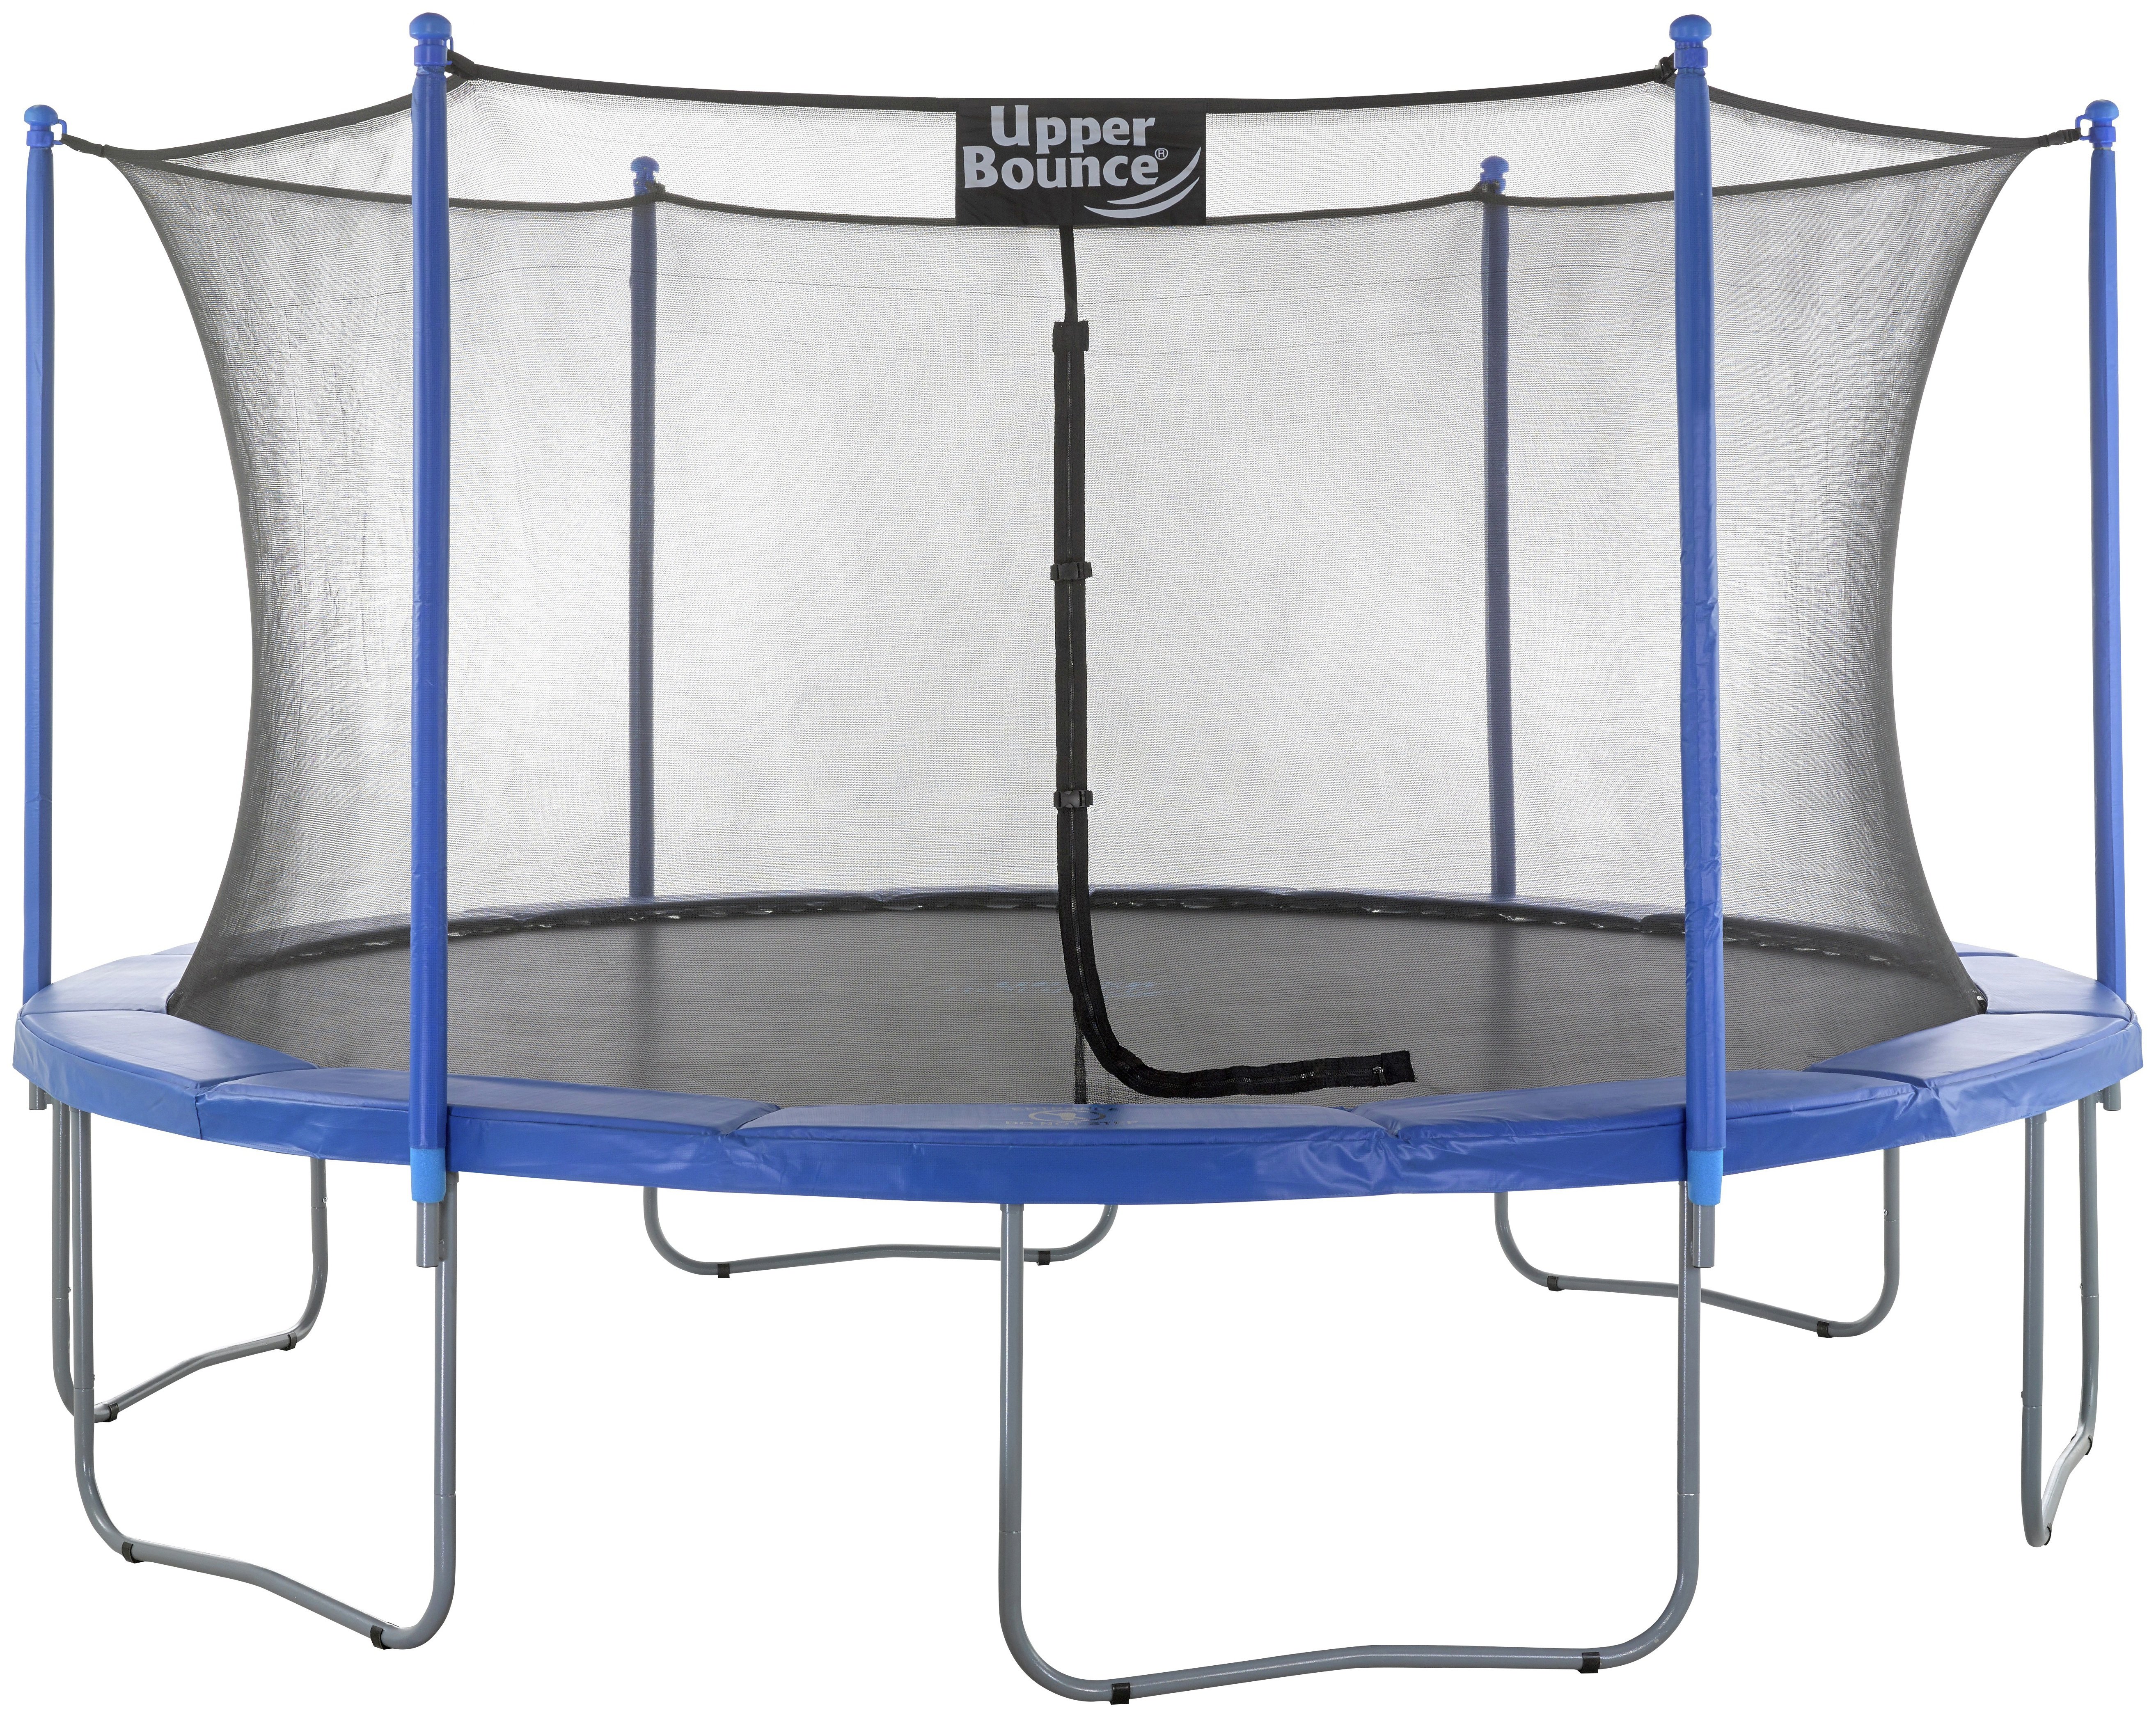 Upper Bounce 14ft Complete Trampoline & Safety Enclosure Set